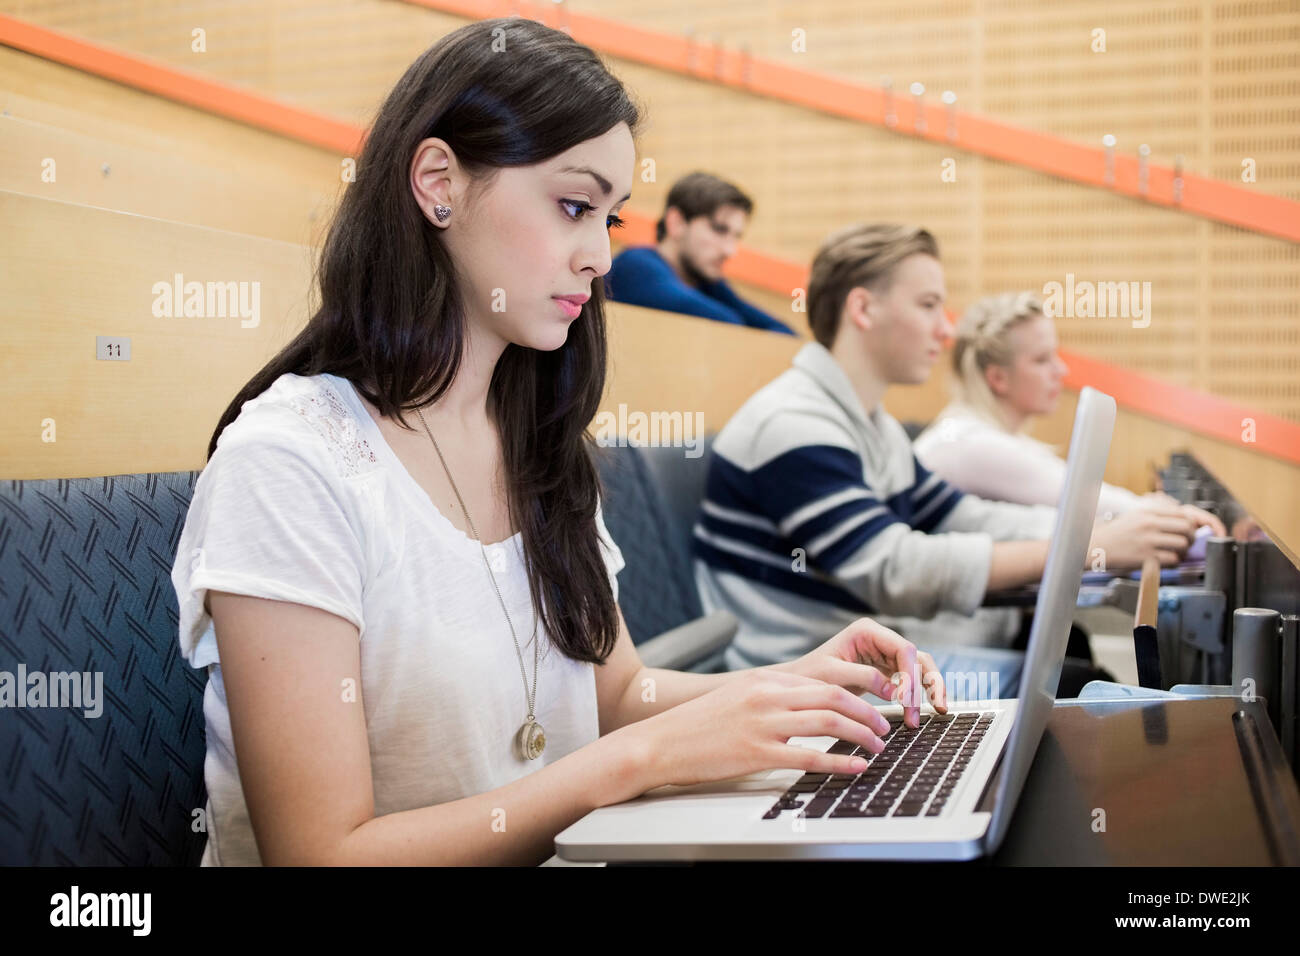 Female university student using laptop in classroom Stock Photo